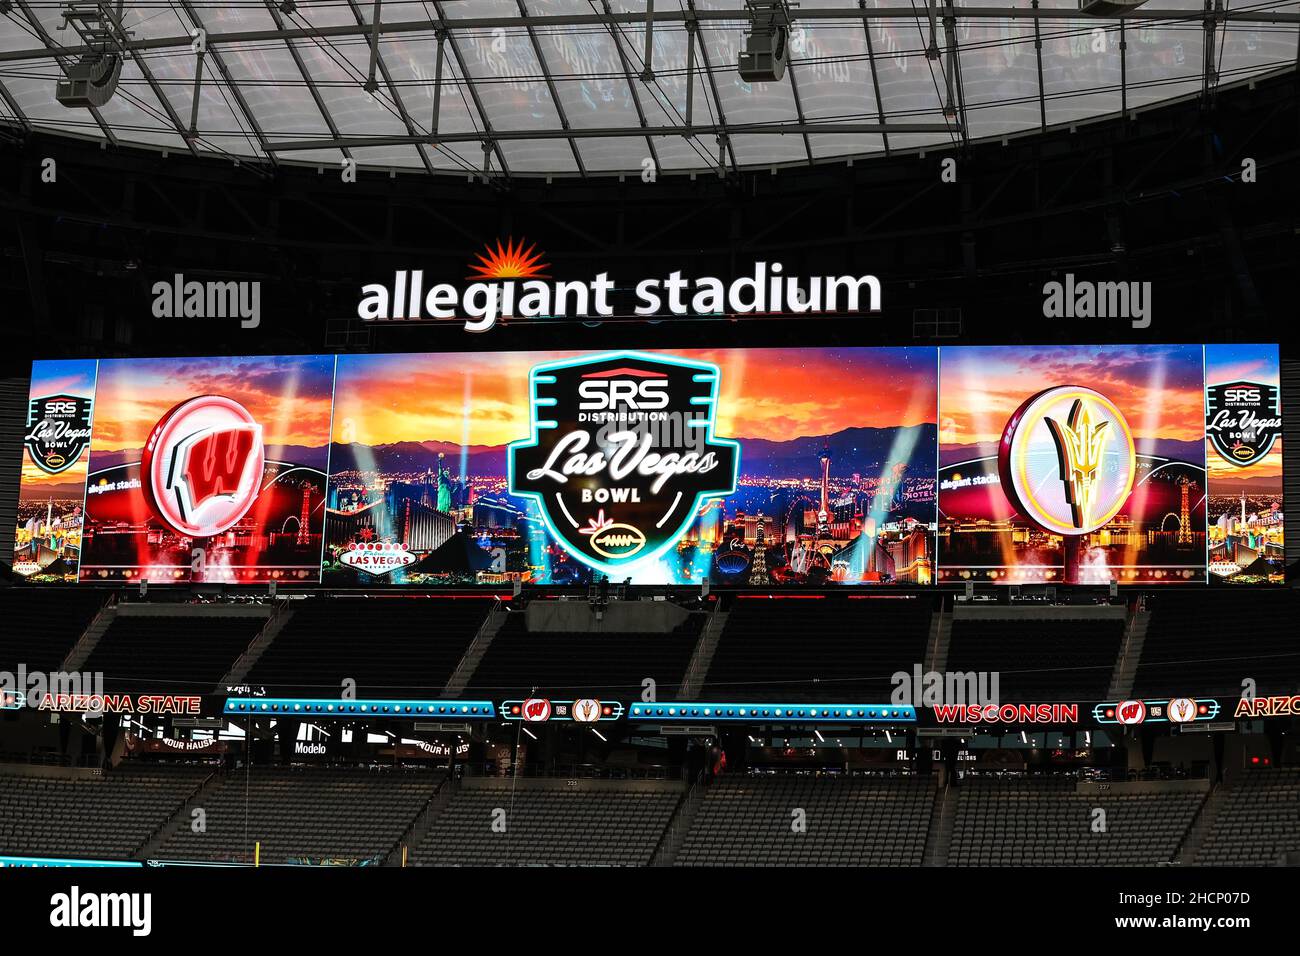 2023 SRS Distribution Las Vegas Bowl to Feature Big Ten vs. Pac-12